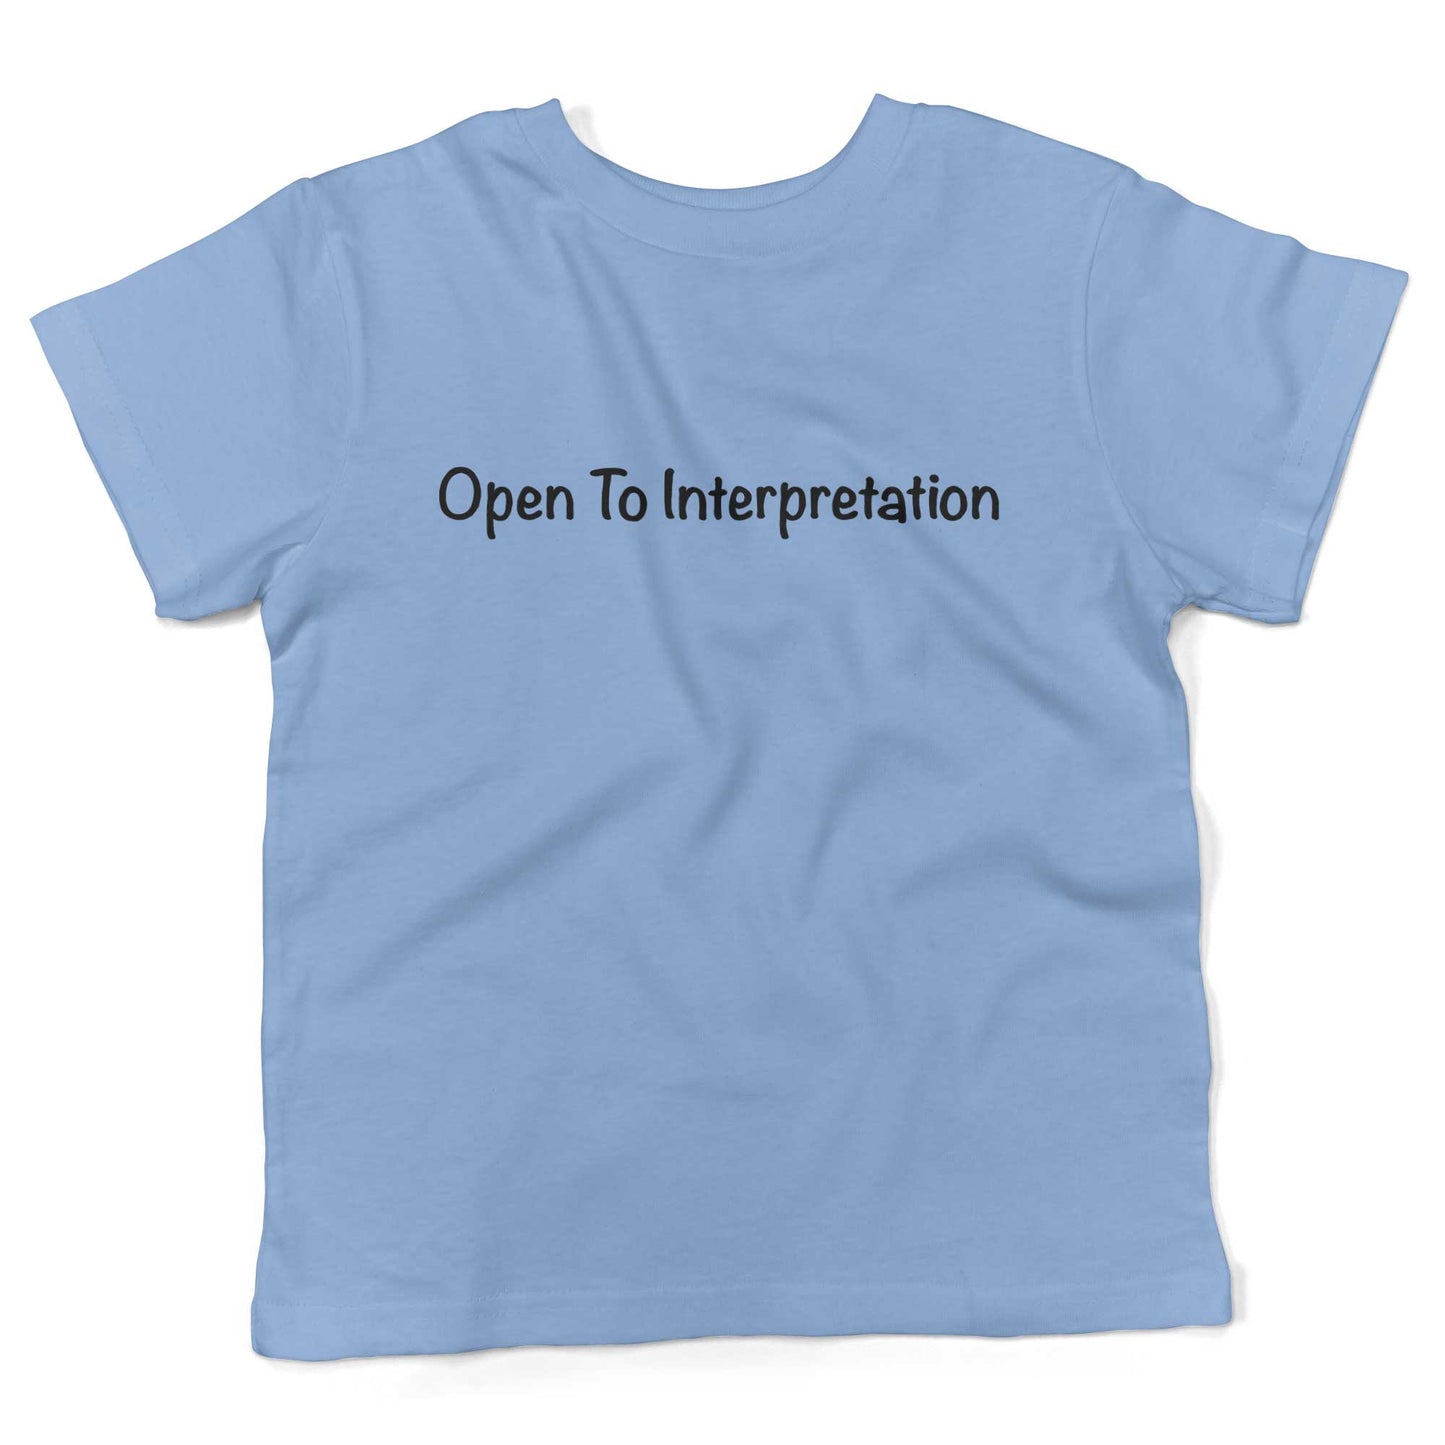 Open To Interpretation Toddler Shirt-Organic Baby Blue-2T